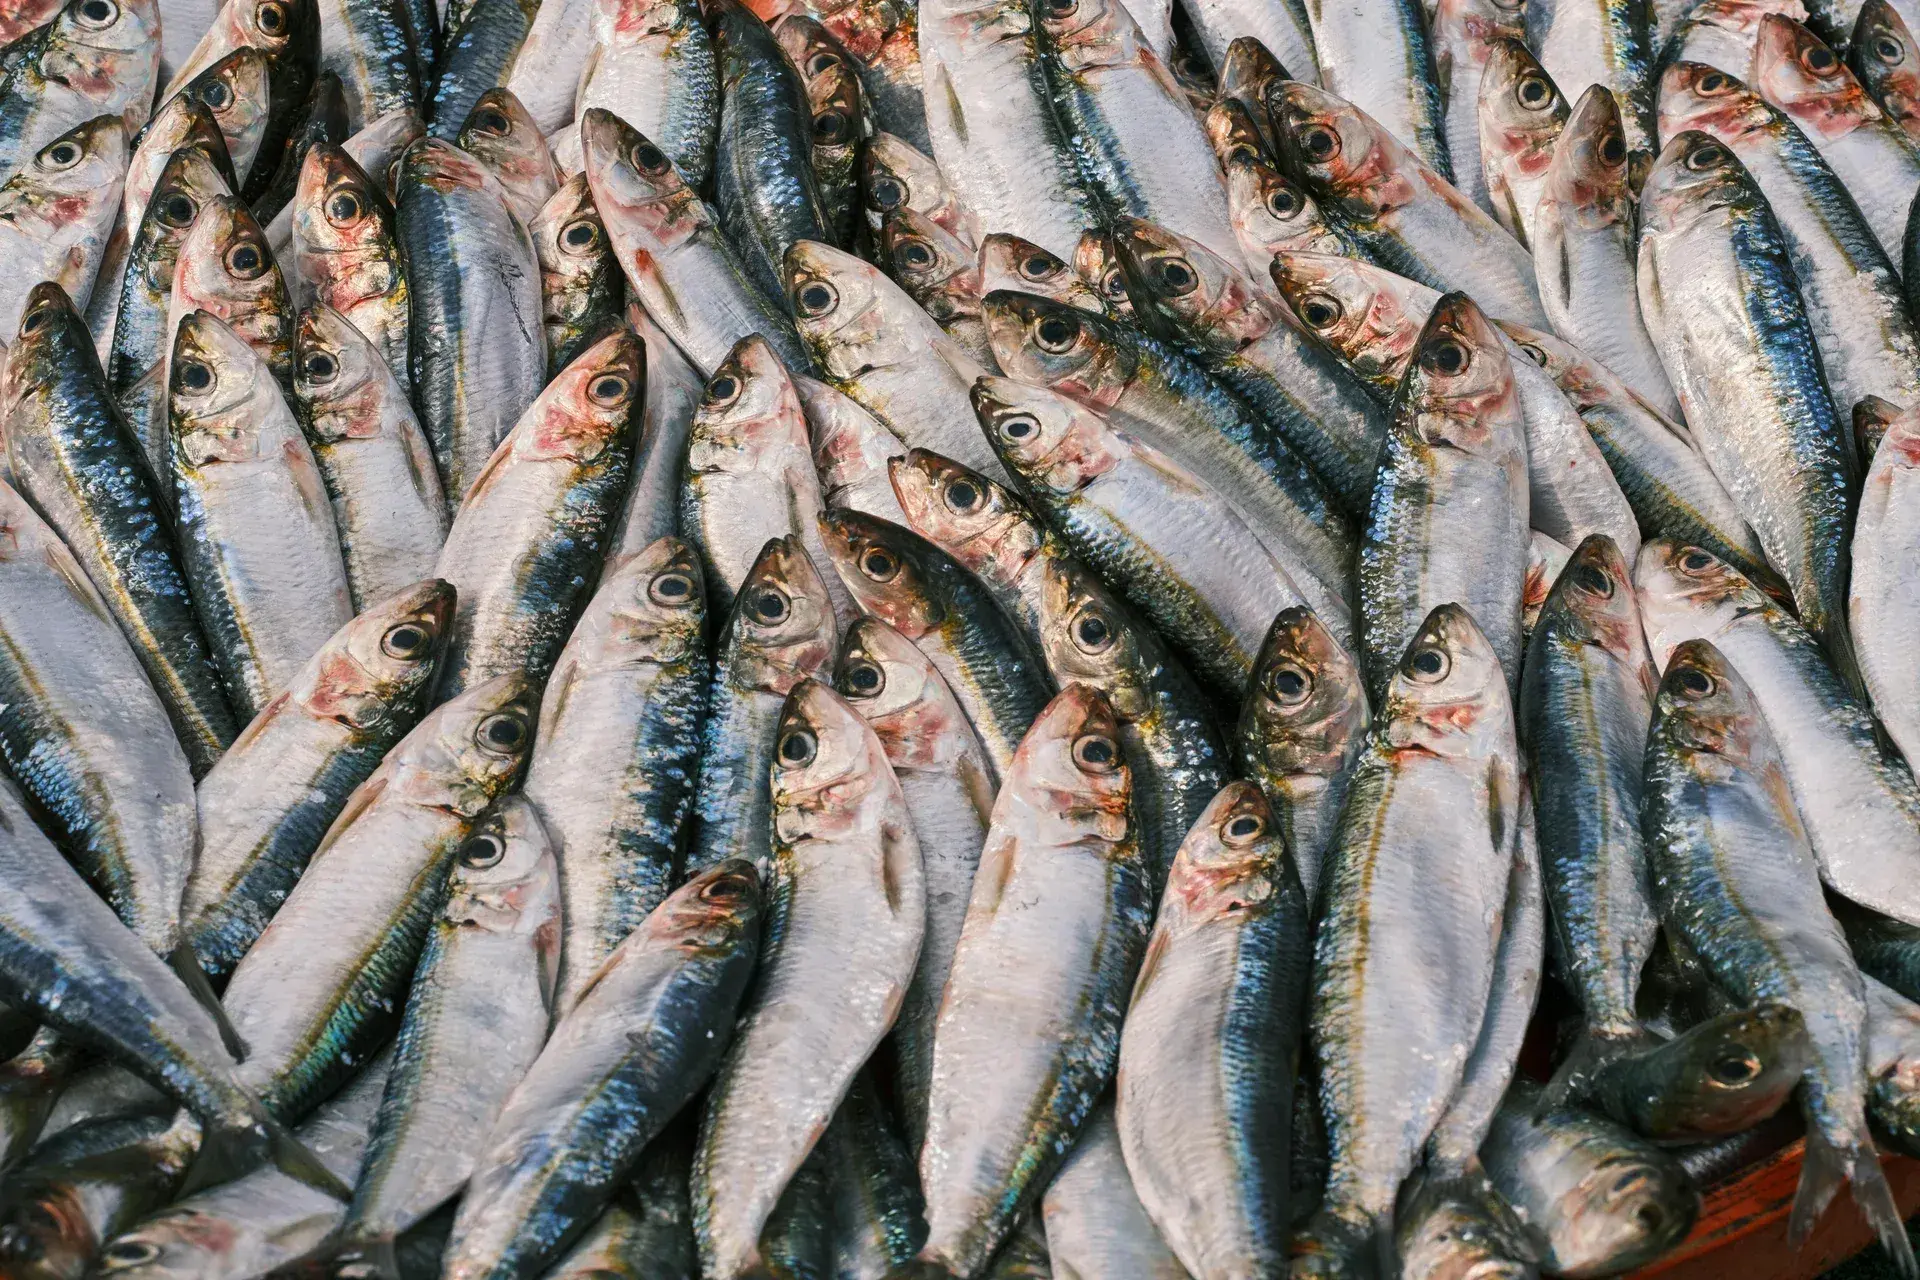 Sardines and Fritura Mixta in Malaga, Spain, Photo 3332